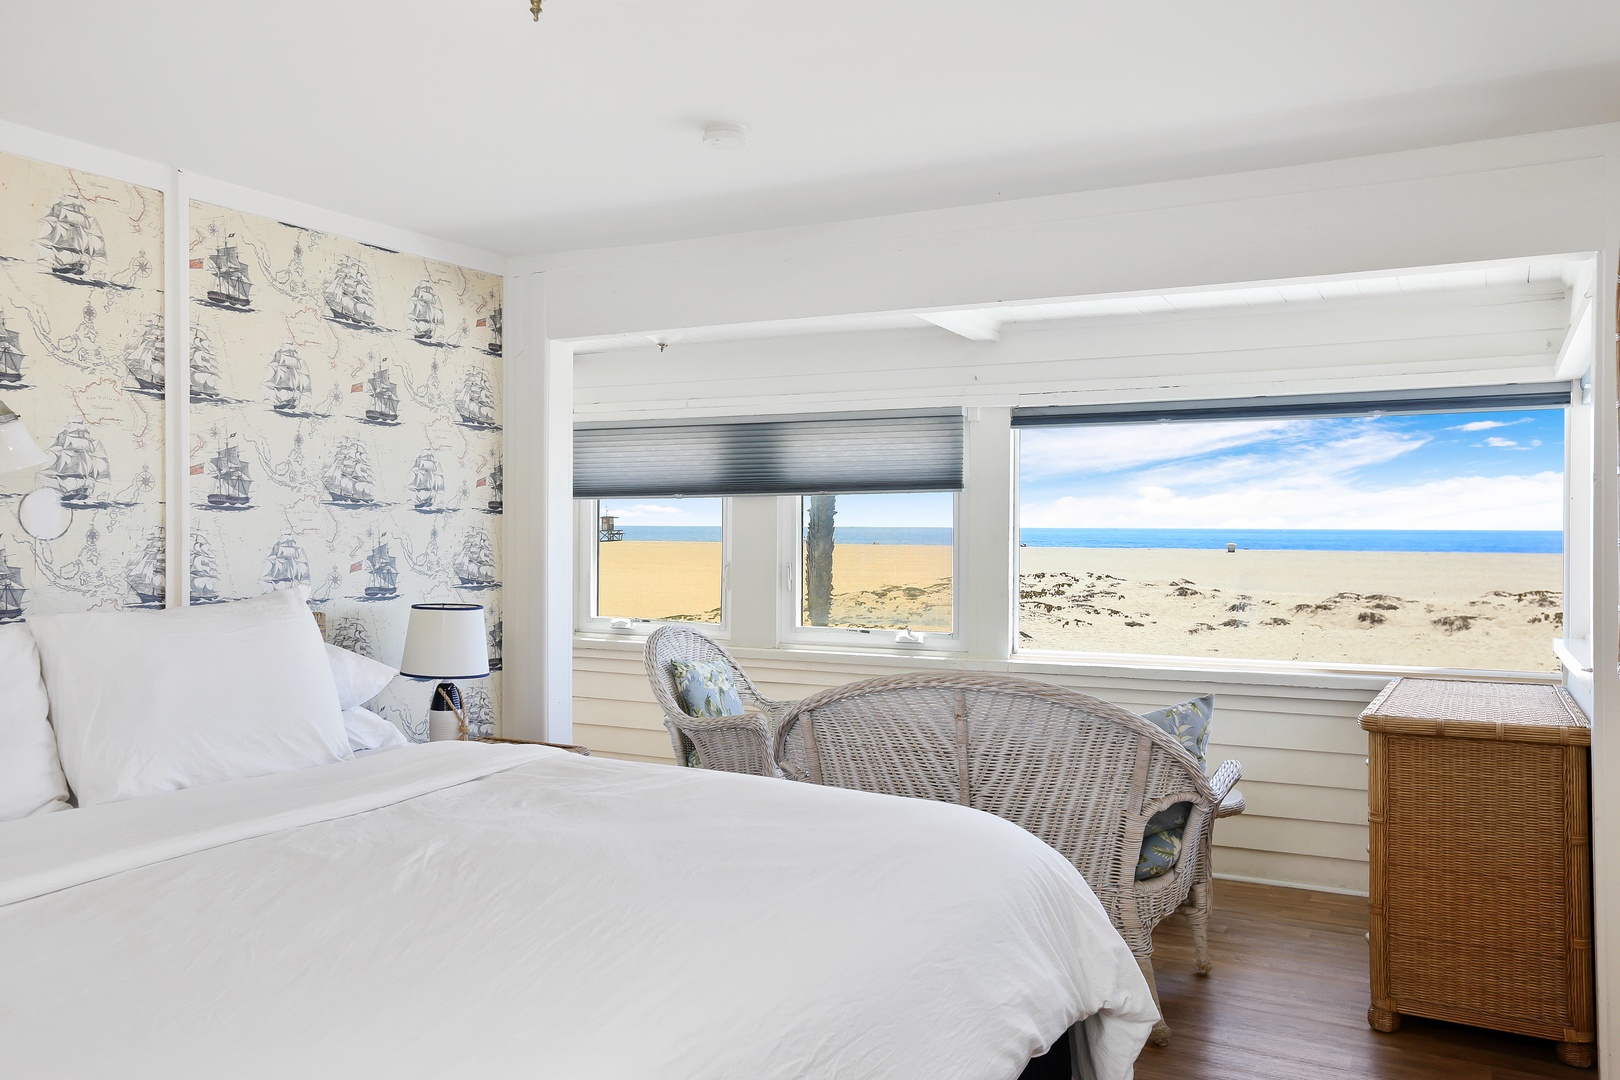 Cozy bedroom with views of the ocean